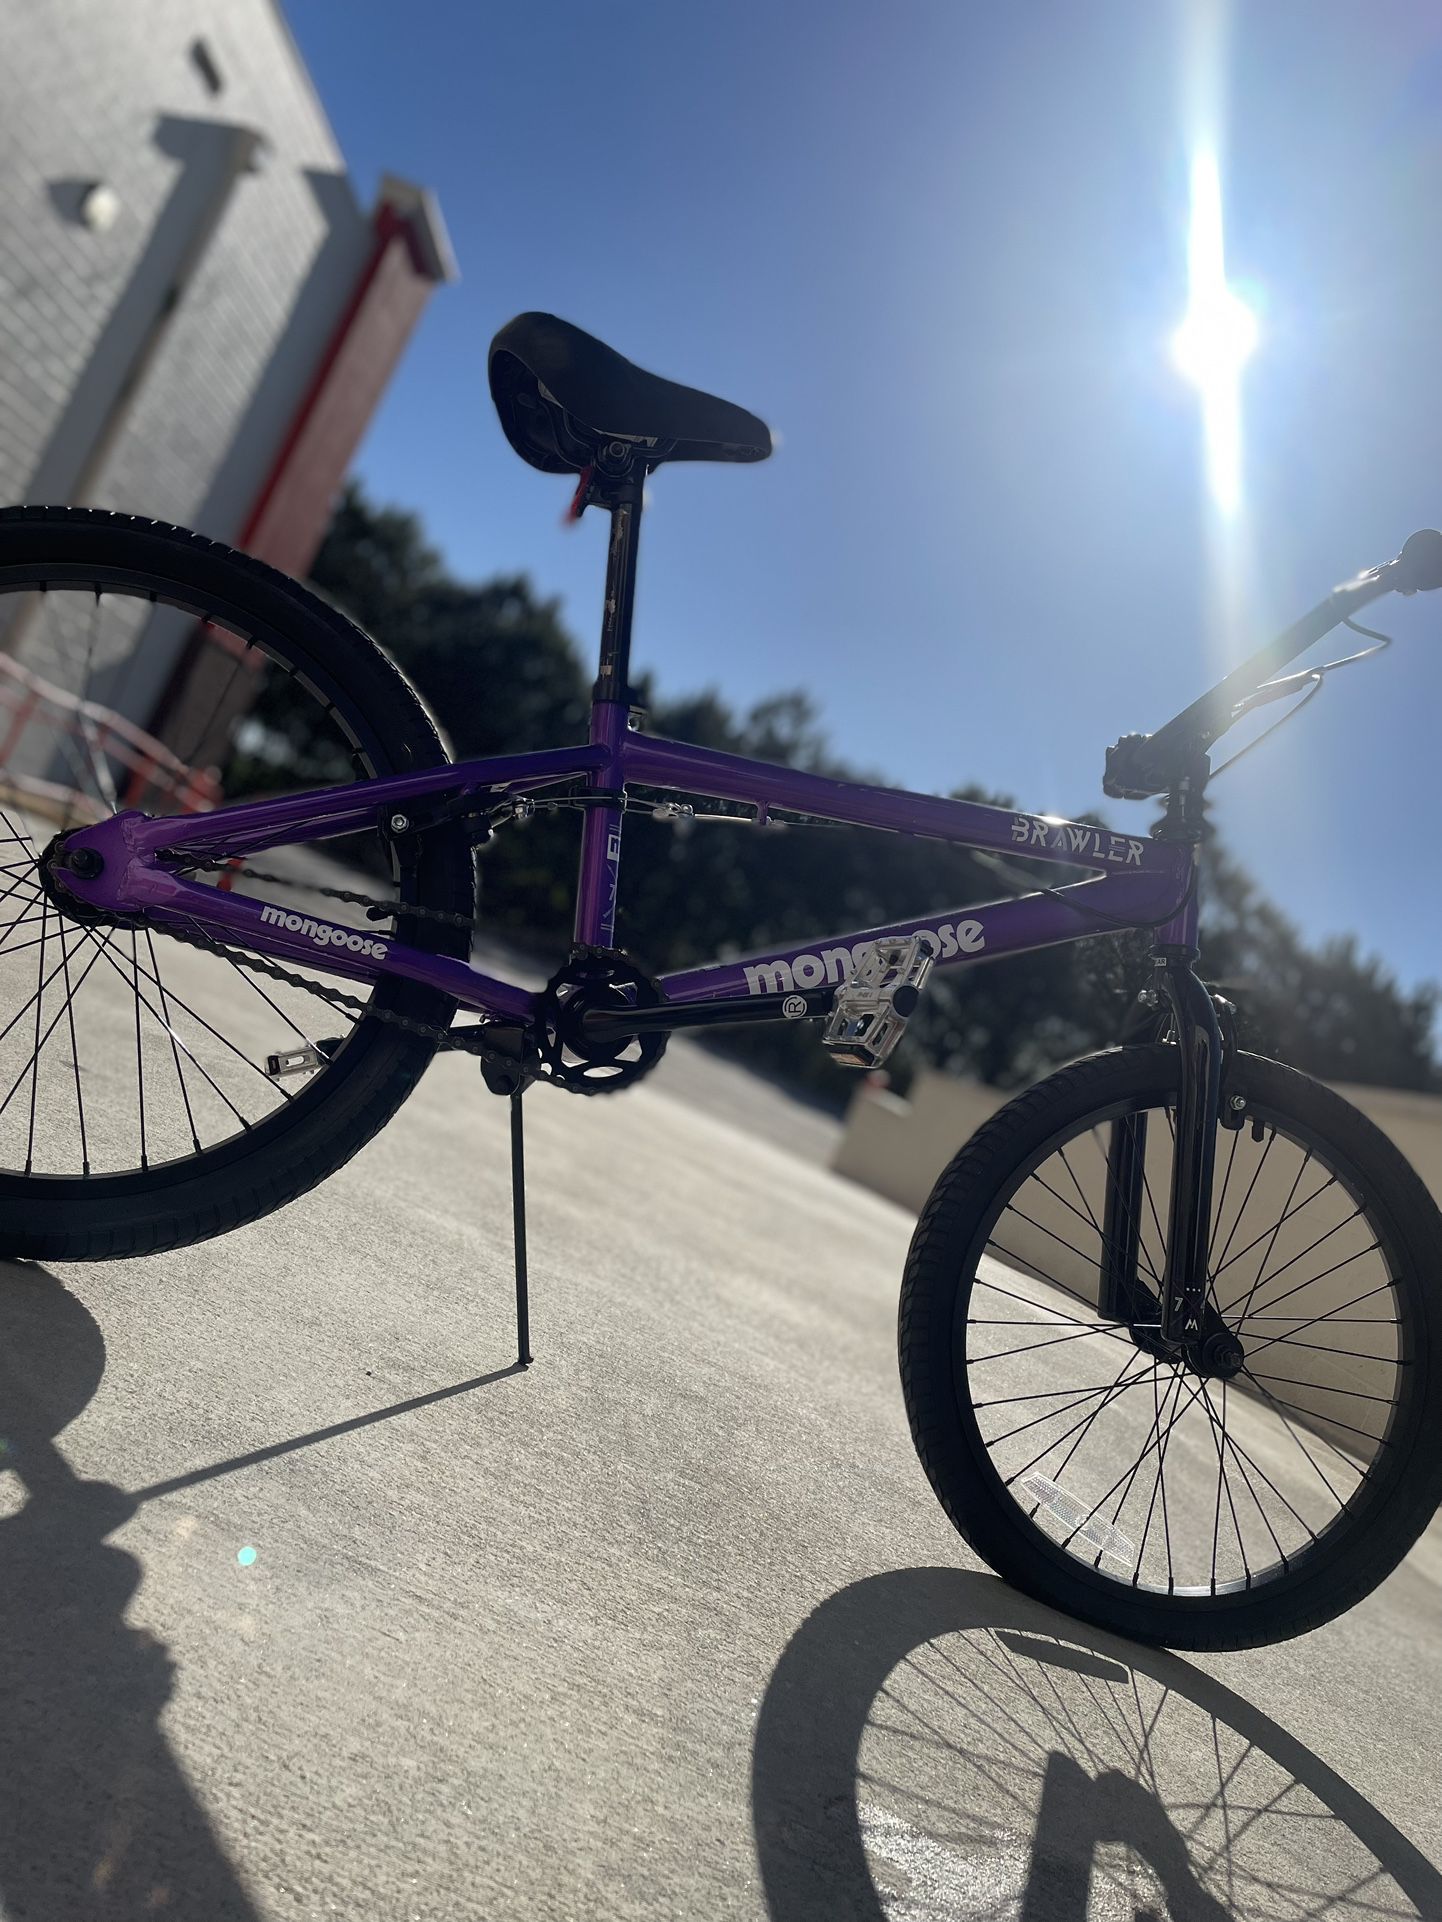 Purple Kids Bike 